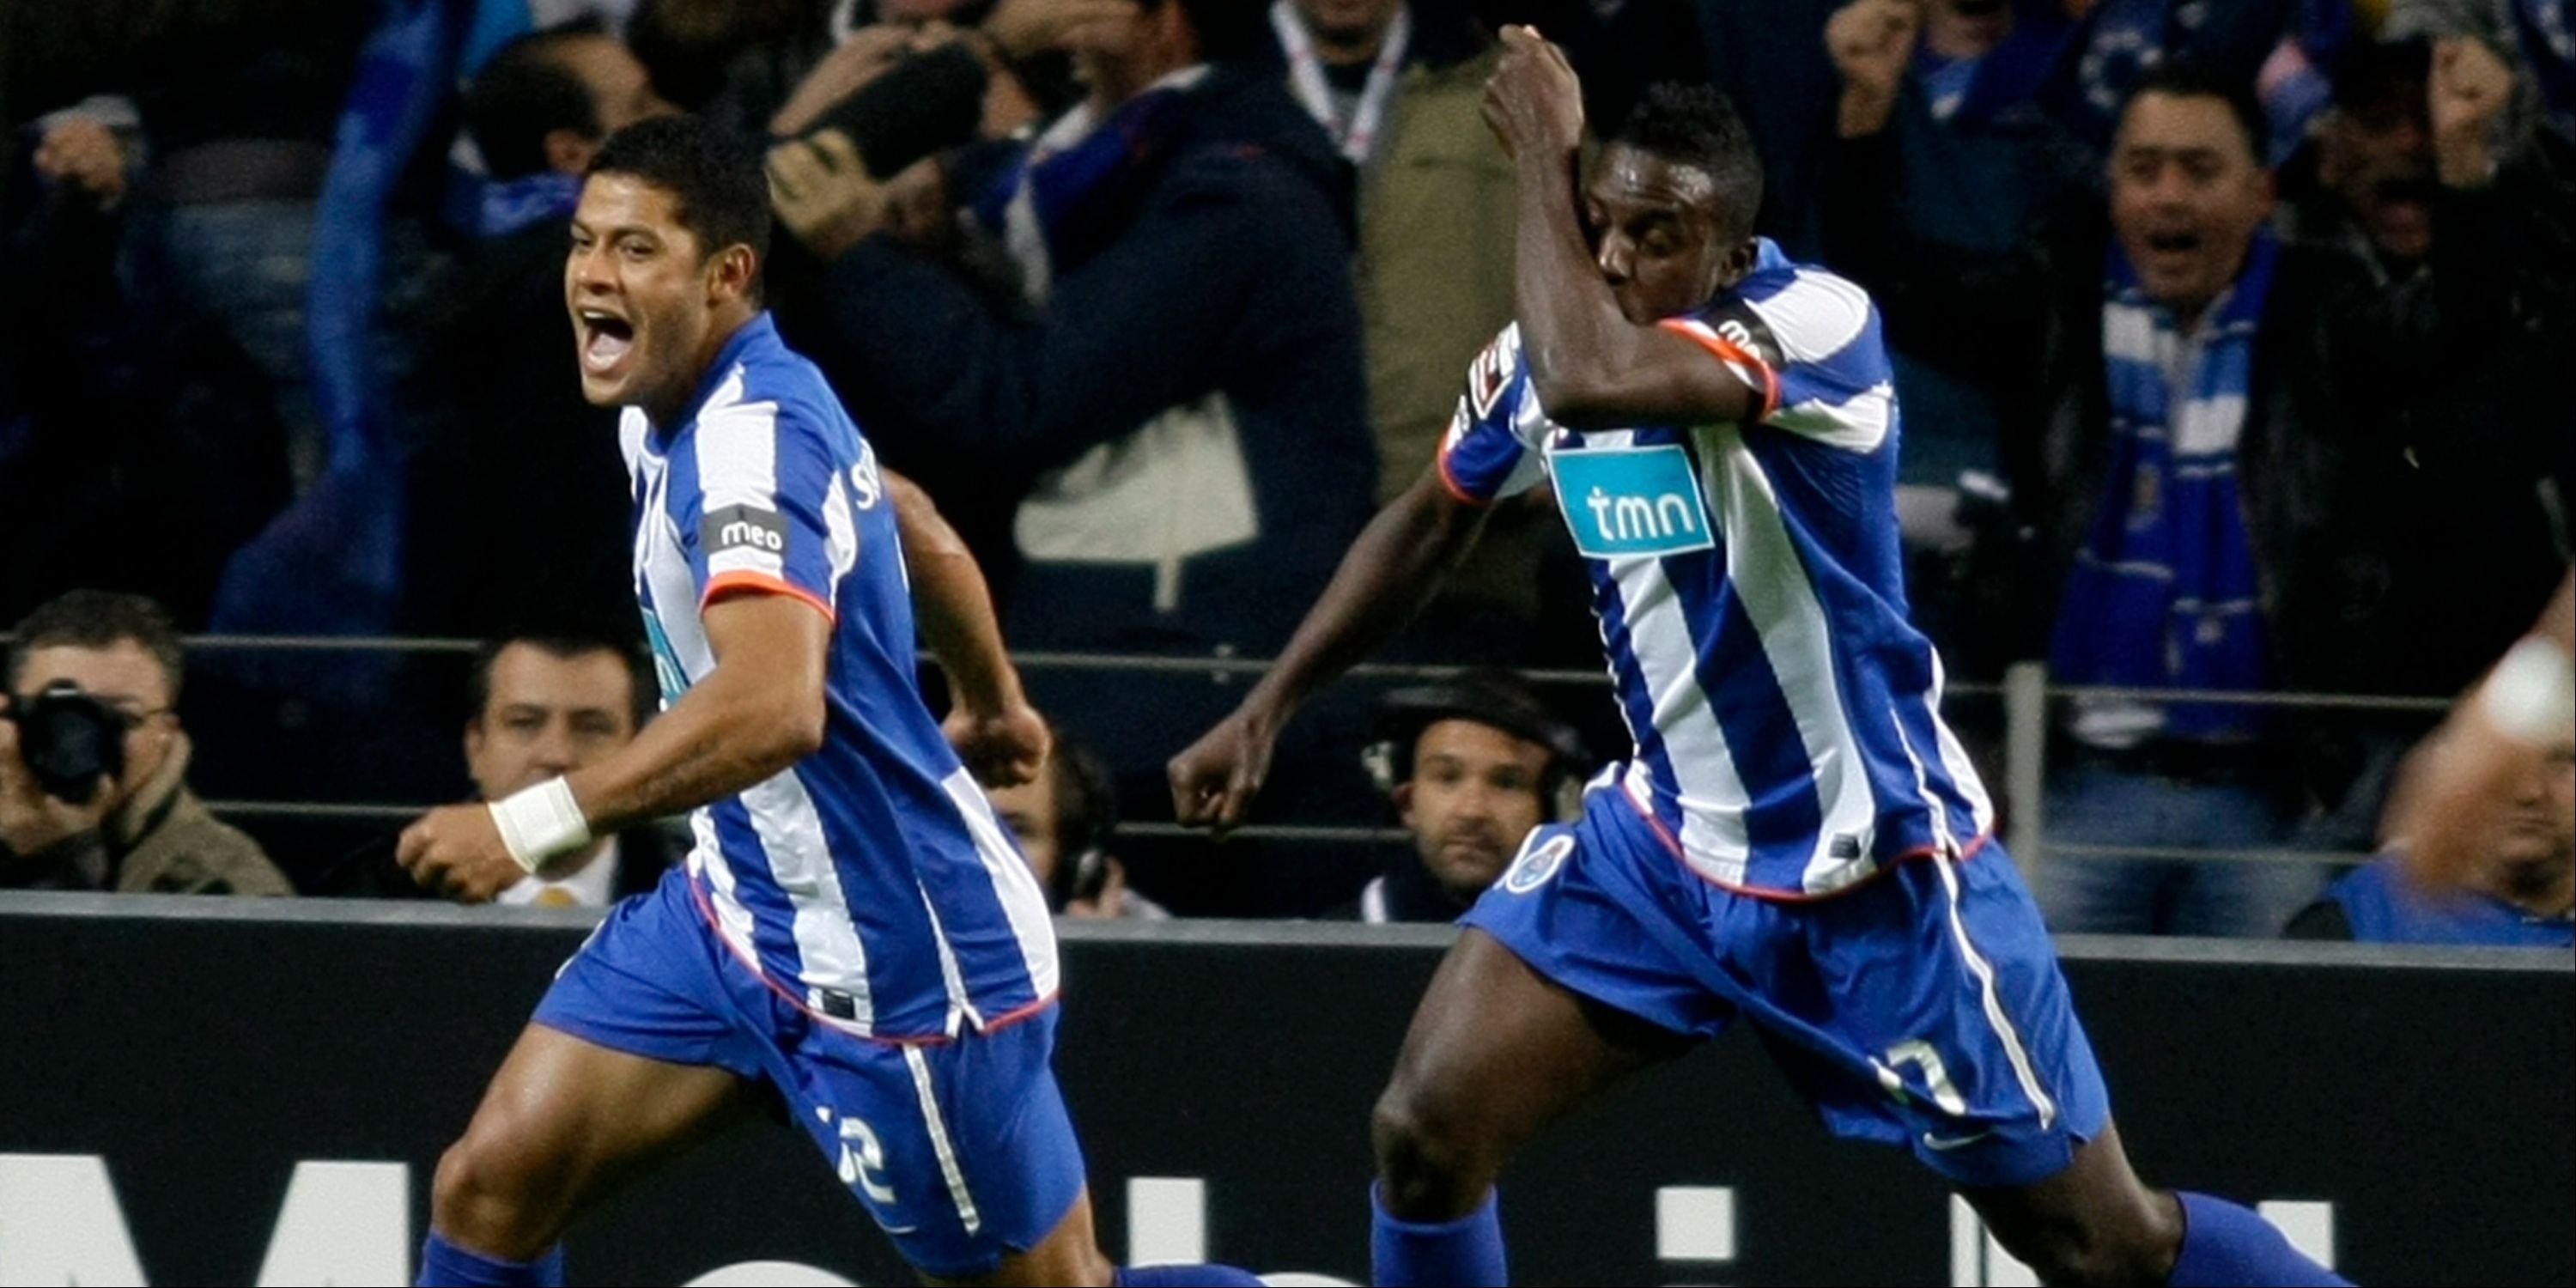 Porto's Hulk and Silvestre Varela celebrate scoring a goal.